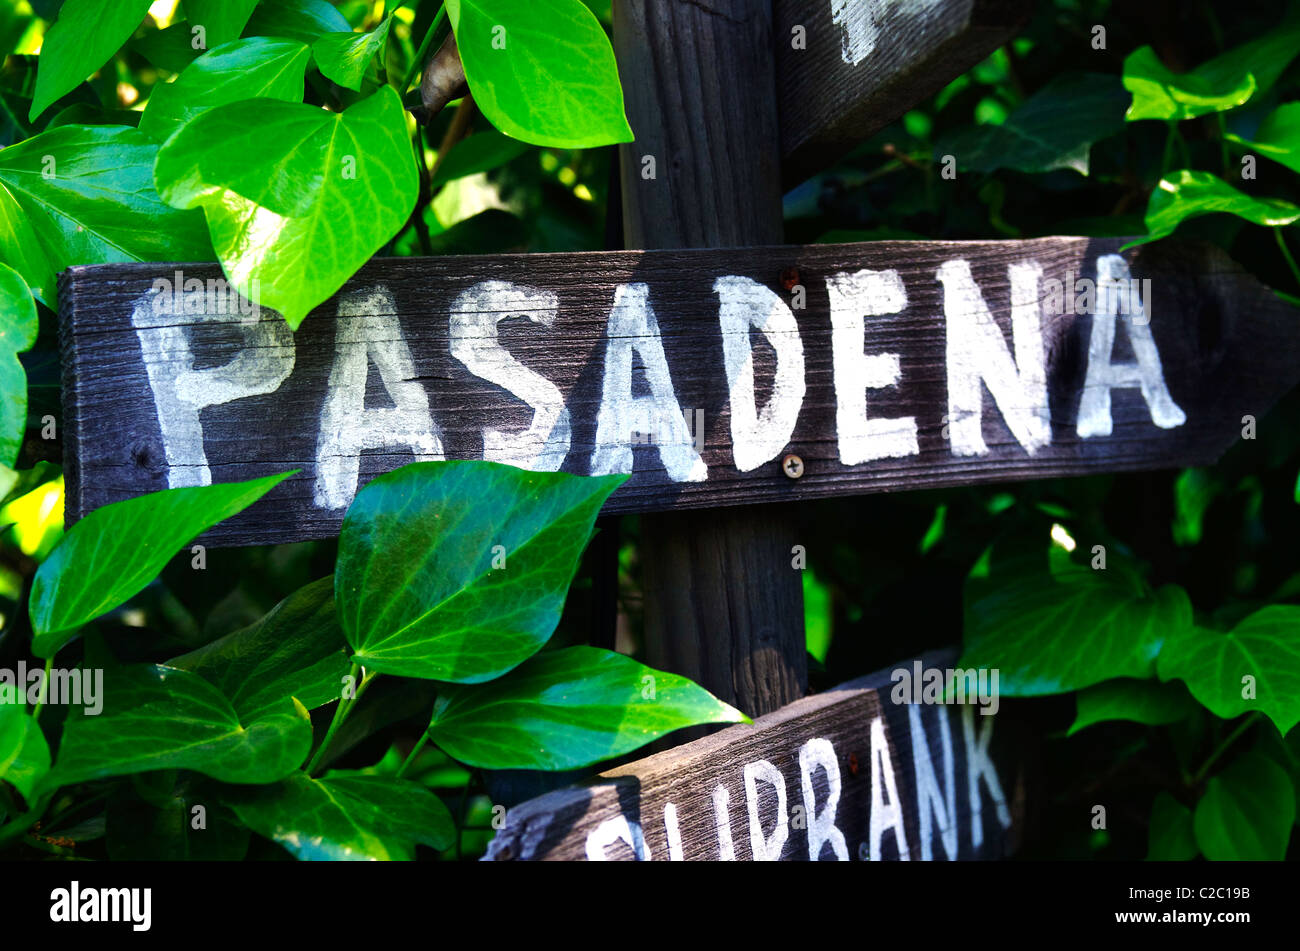 Wooden sign pointing towards Pasadena, California. Stock Photo